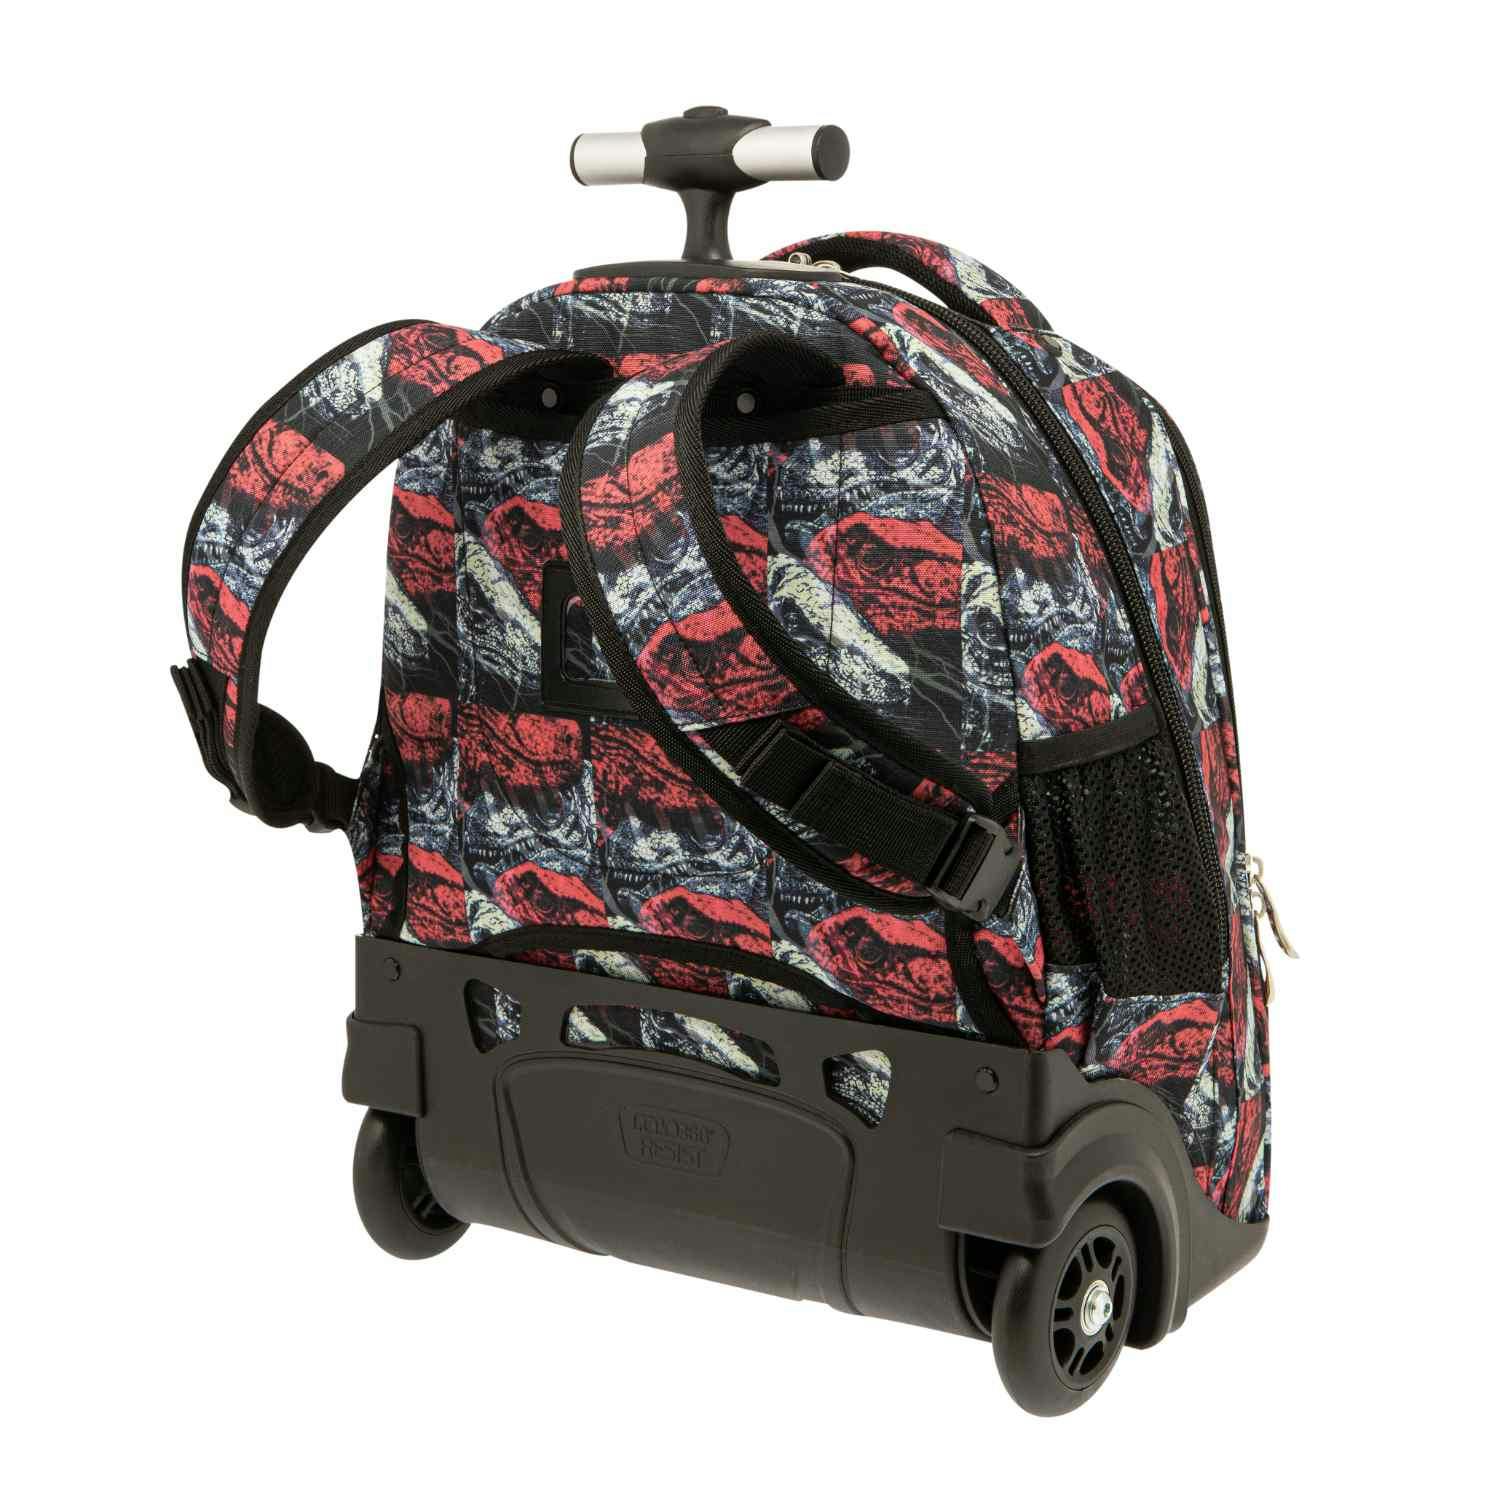 POLO - Polo ROLLING Trolley Bag Σχολική Τσάντα Τρόλευ Δημοτικού Μ35 x Π21 x Υ42cm 9-01-016-8185